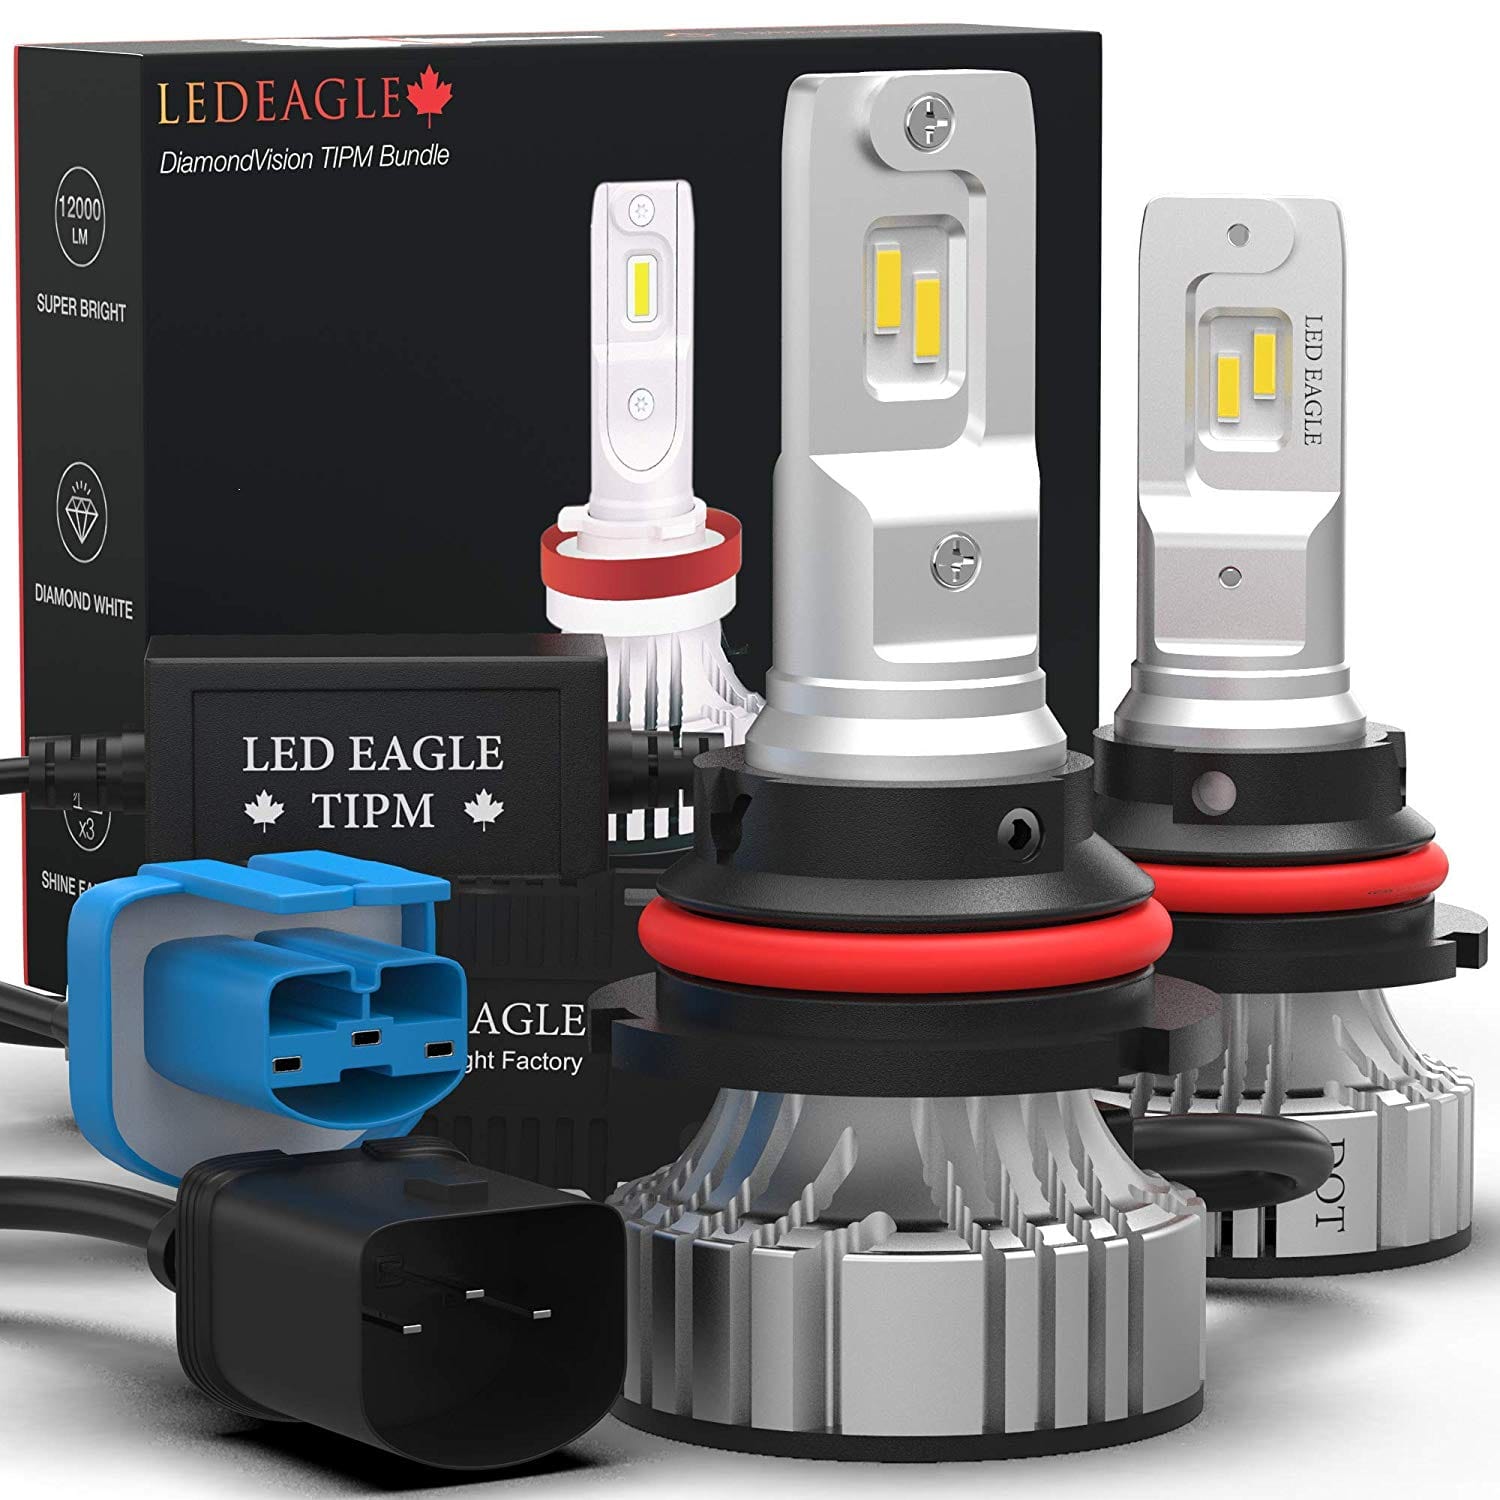 LED EAGLE DiamondVision 9007(HB5) LED Headlight Bulbs & TIPM Bundle for Jeep